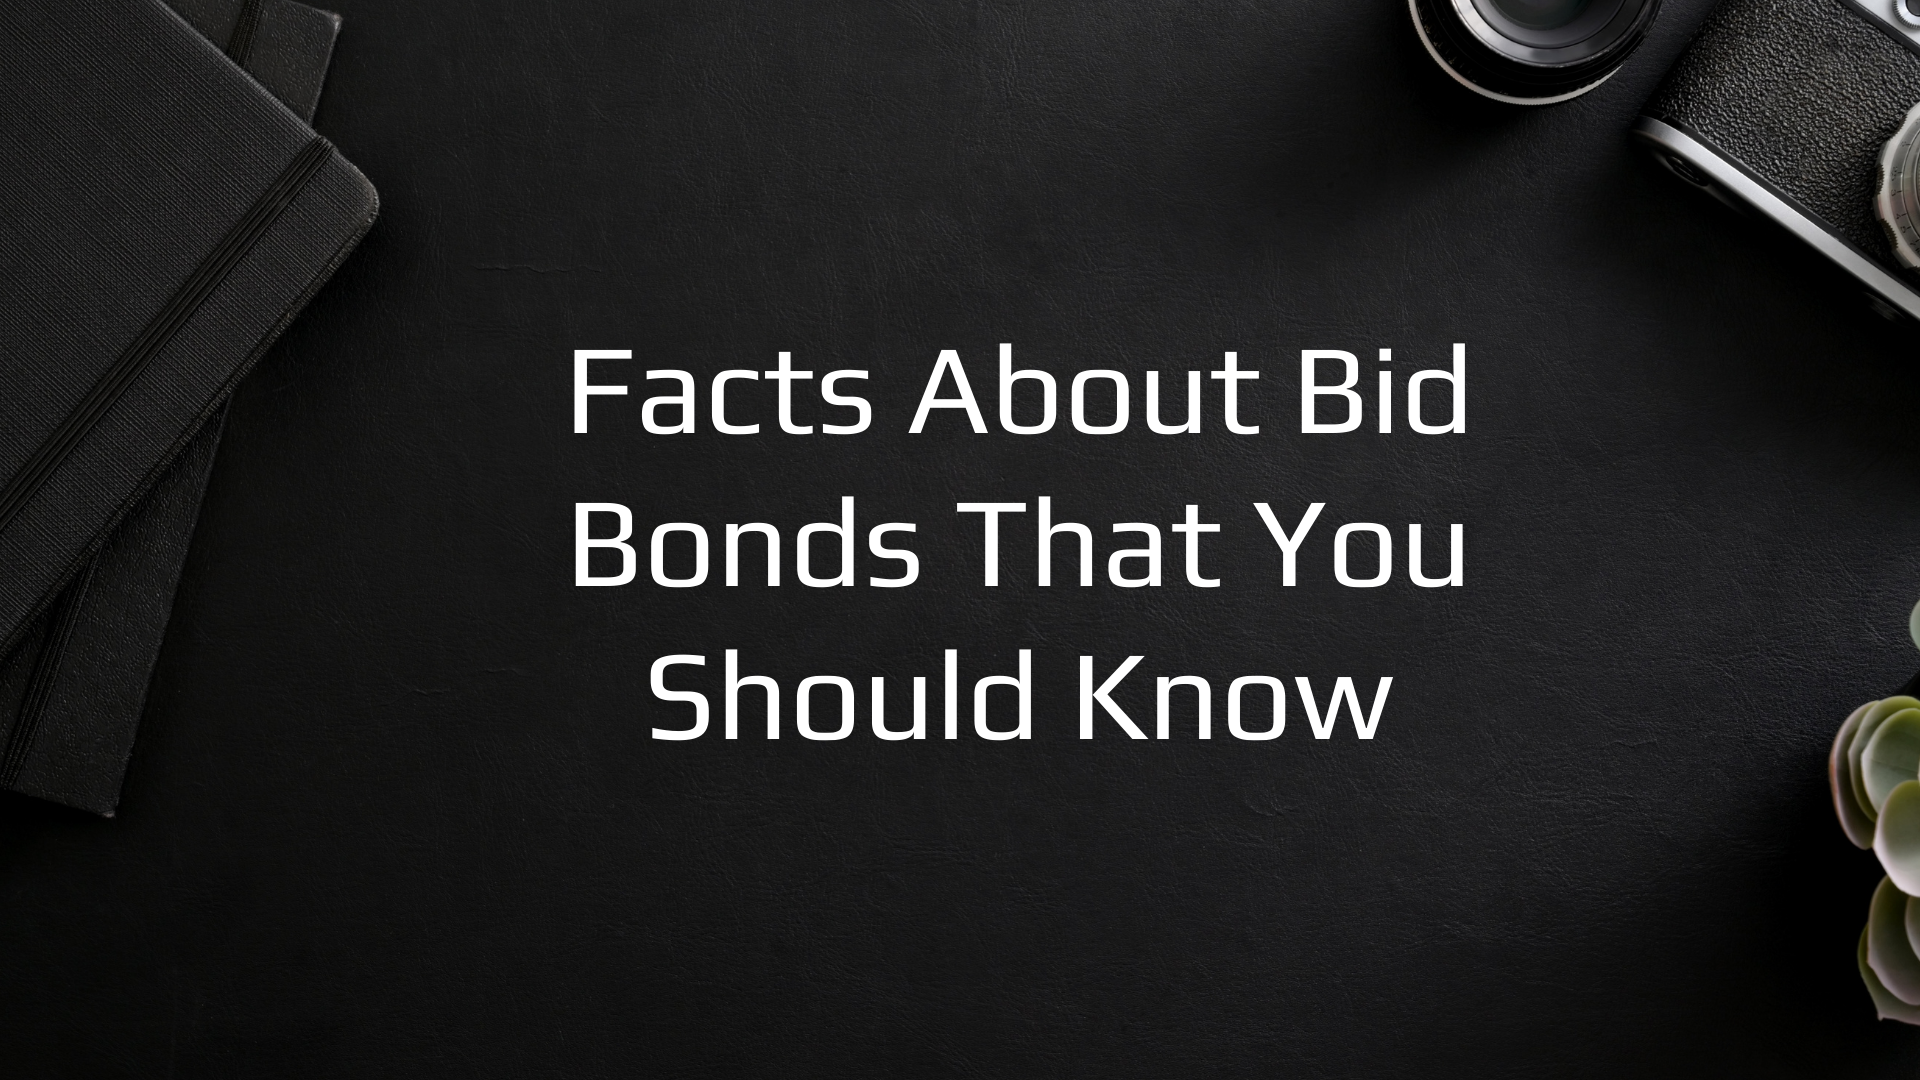 bid bond - What precisely is a bid bond - black